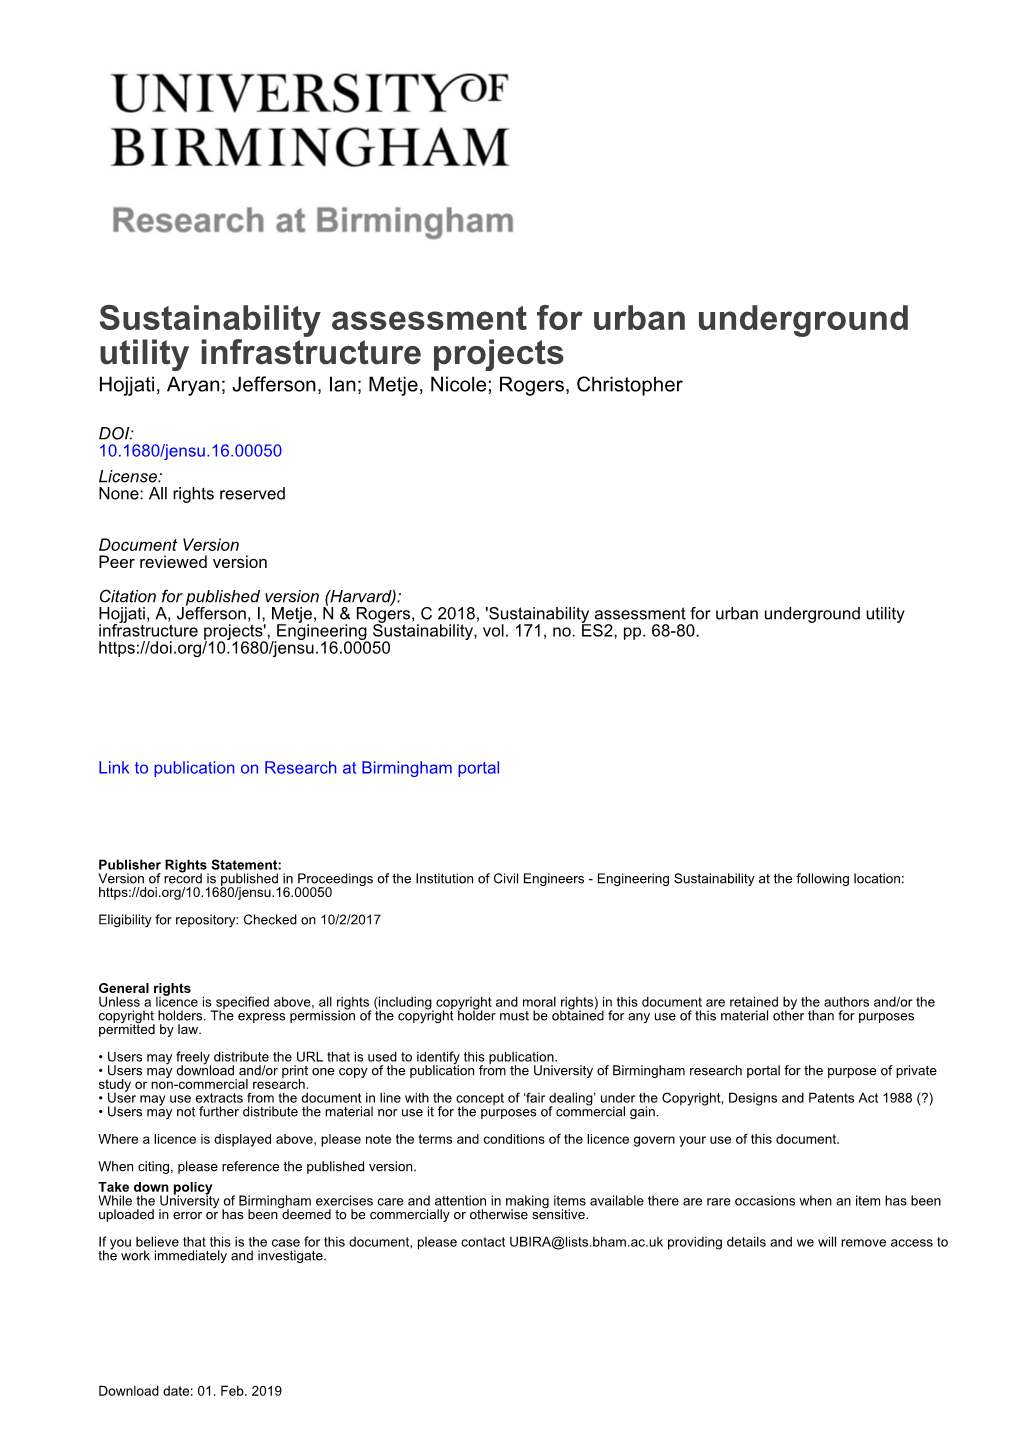 Sustainability Assessment for Urban Underground Utility Infrastructure Projects Hojjati, Aryan; Jefferson, Ian; Metje, Nicole; Rogers, Christopher